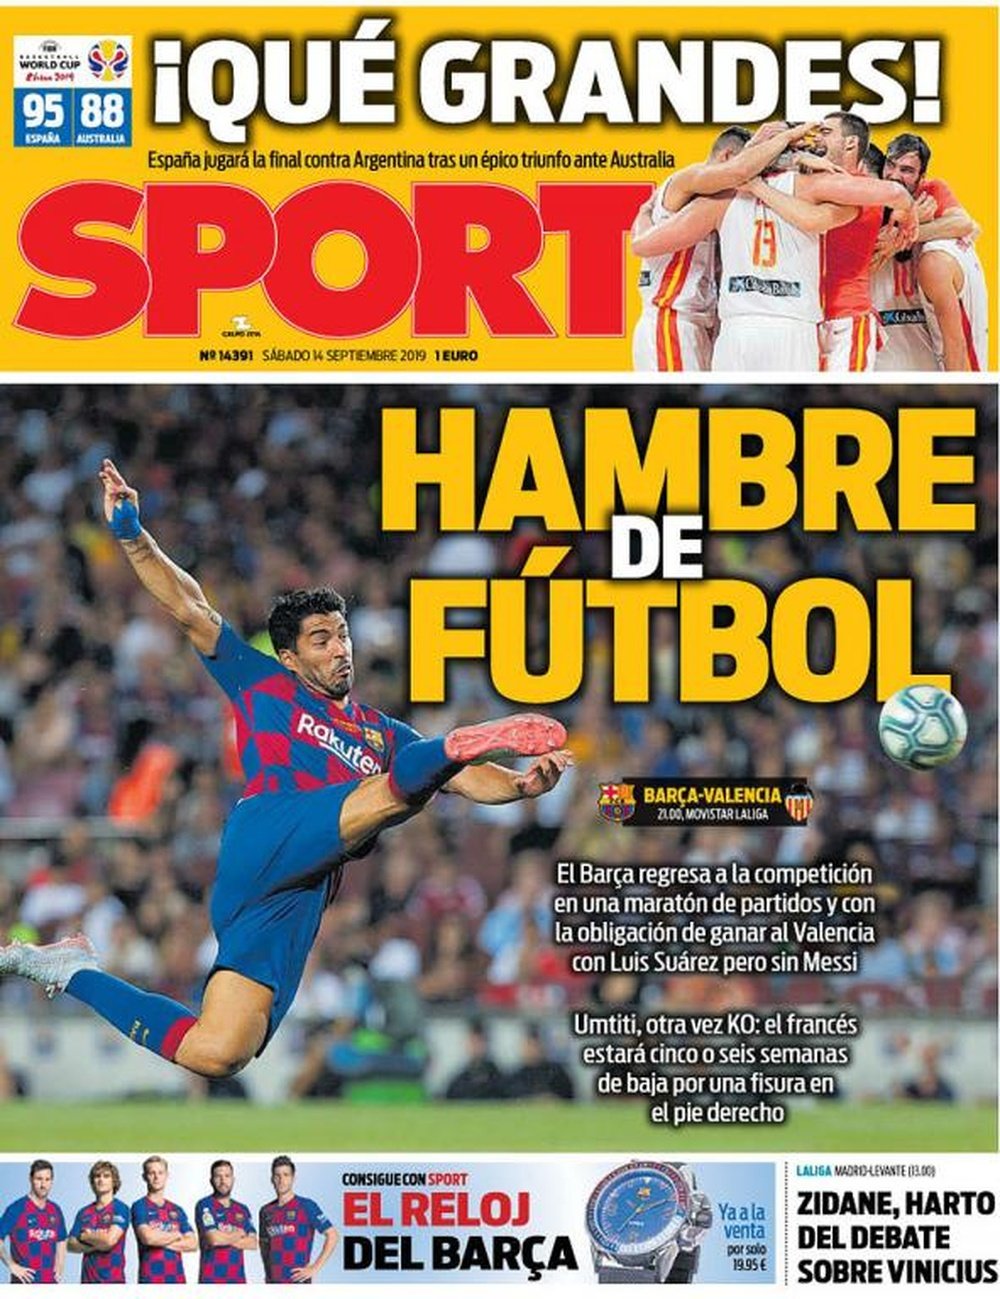 Capa do jornal Sport de 14-09-19. Sport